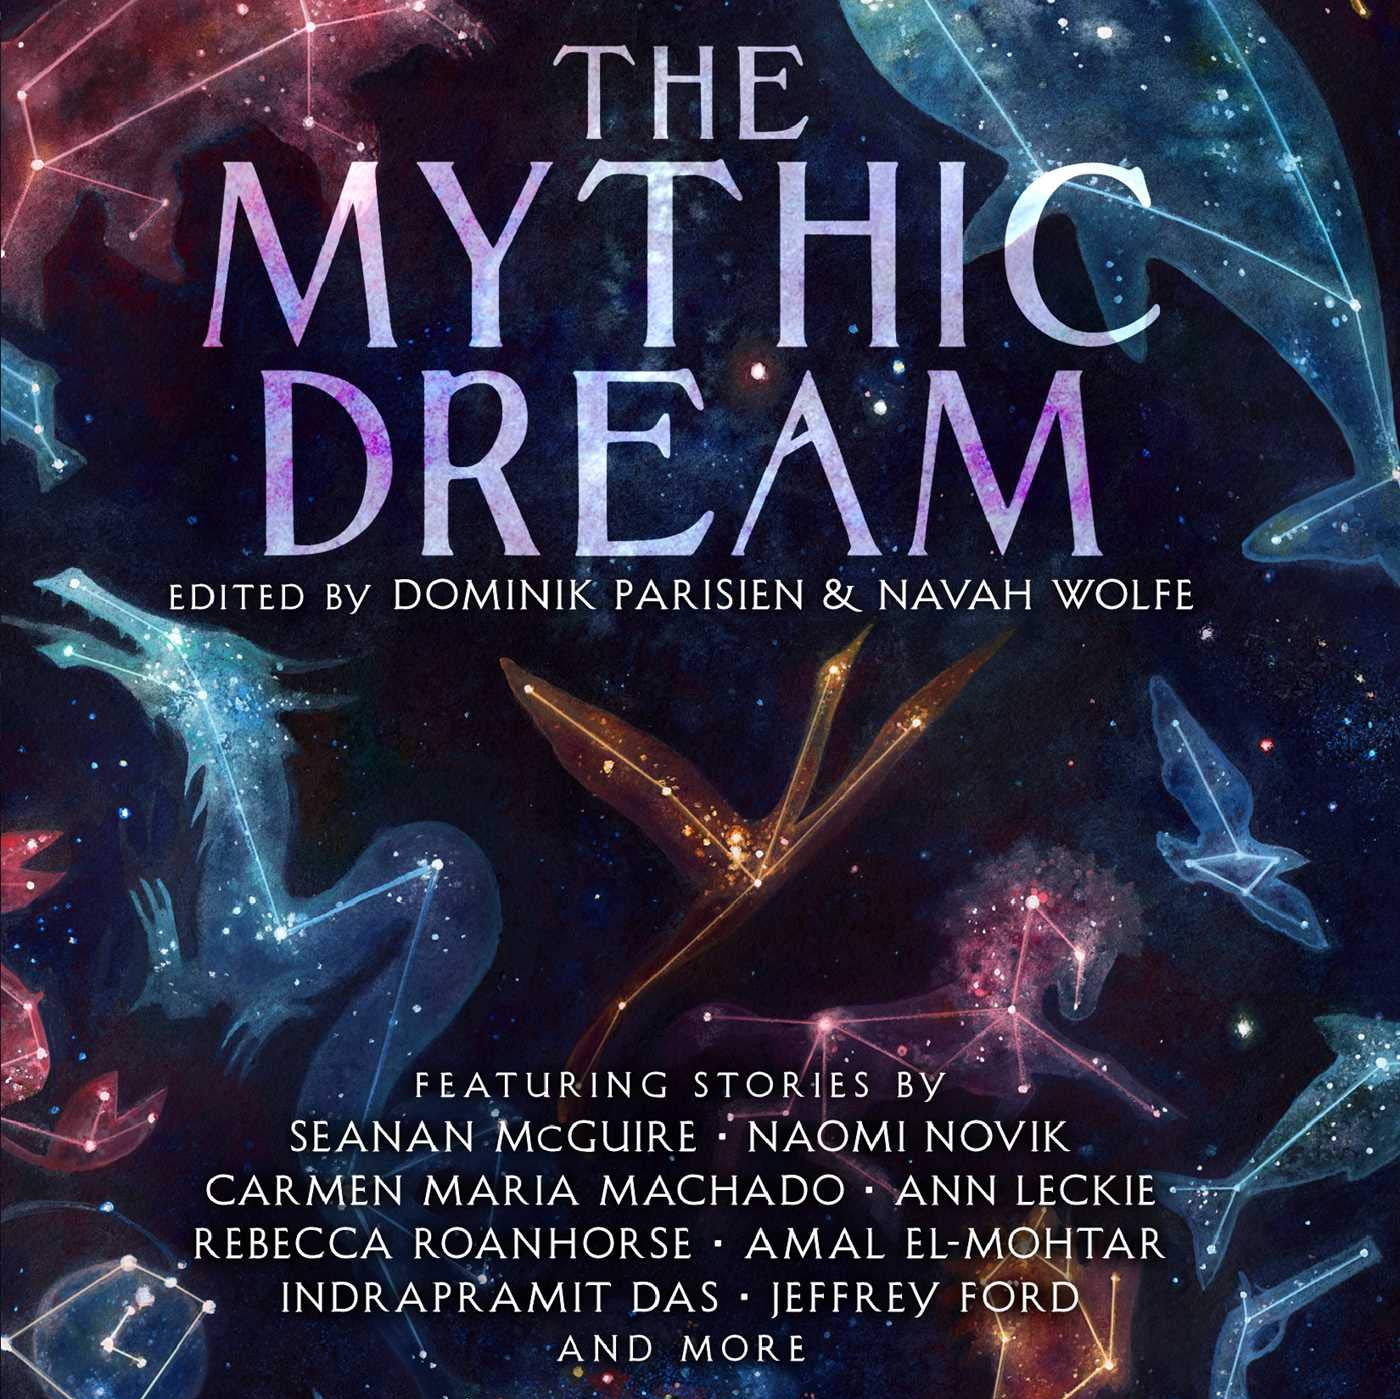 The Mythic Dream edited by Dominik Parisien & Navah Wolfe